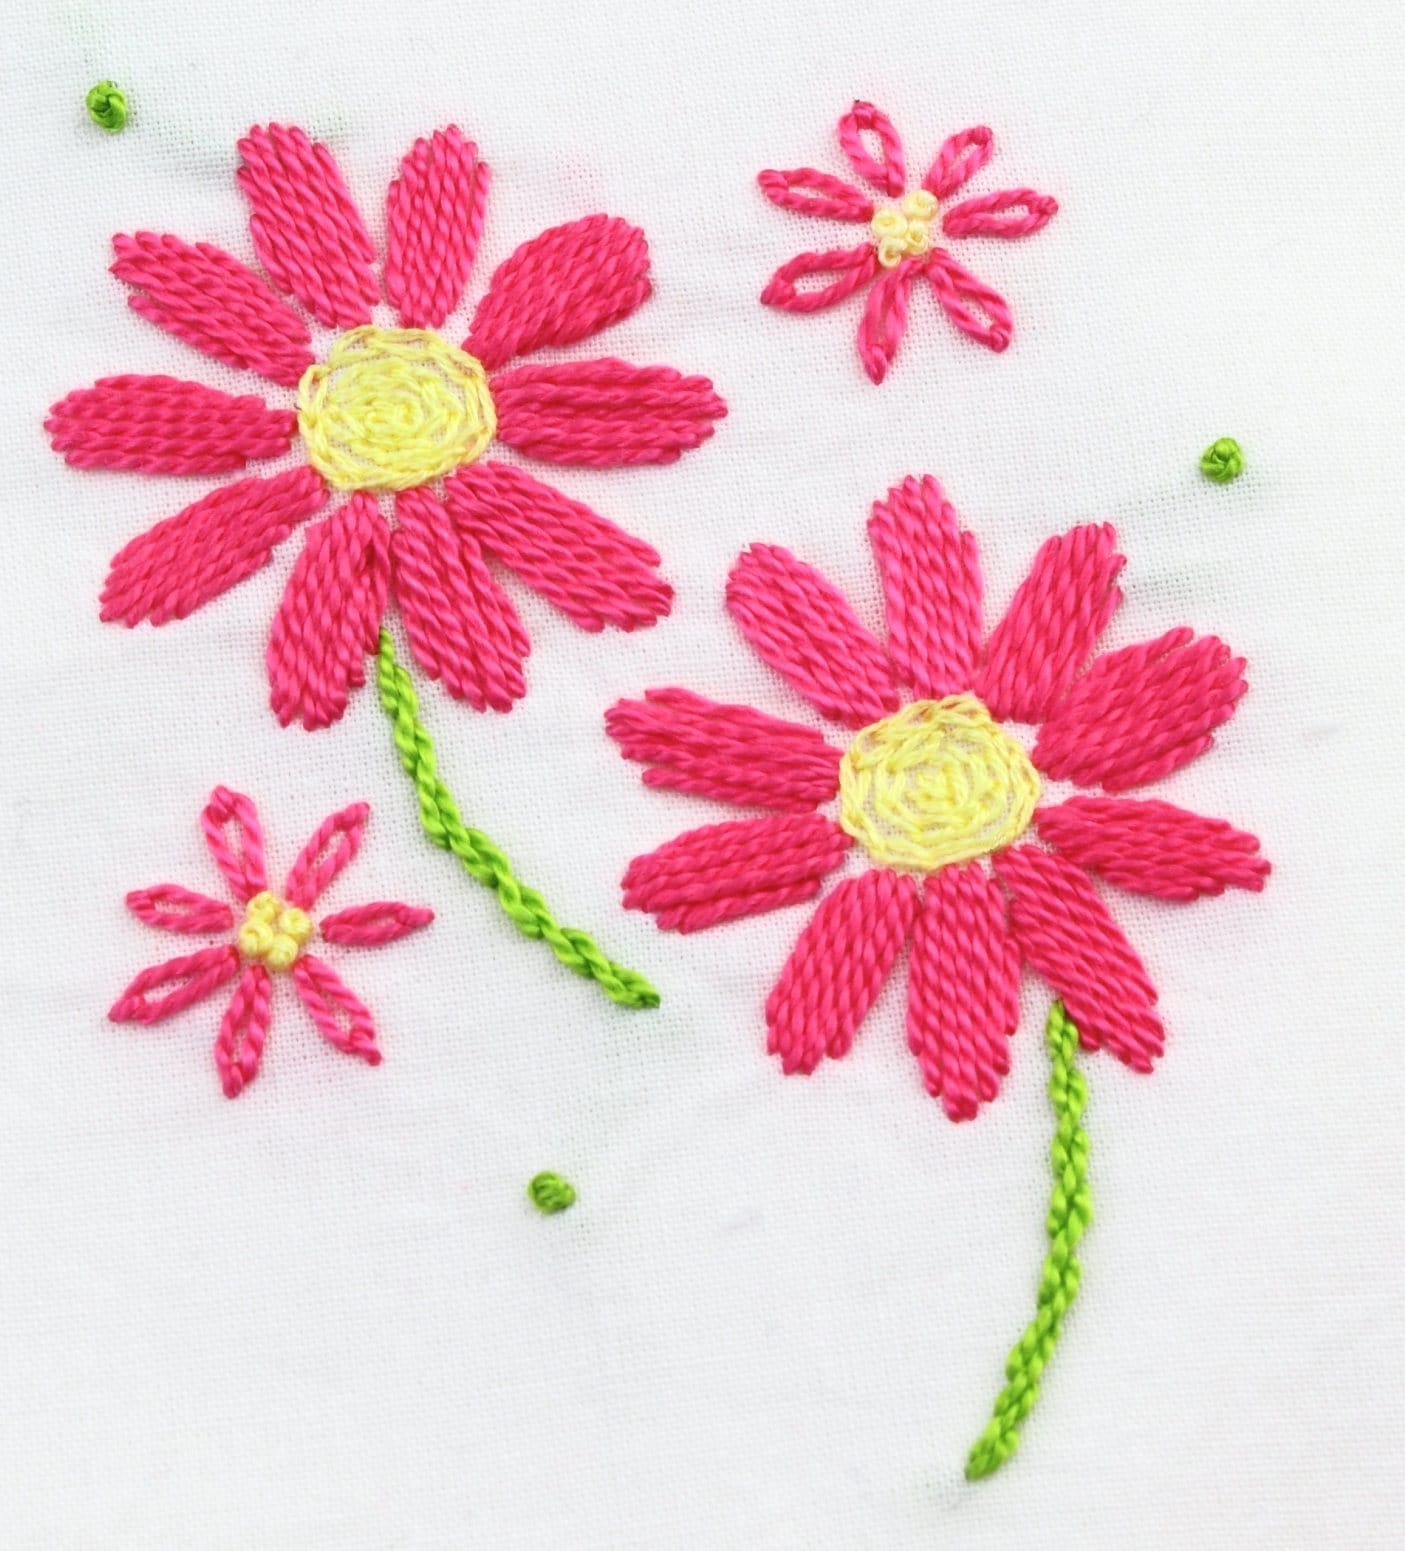 Daisy Embroidery Pattern